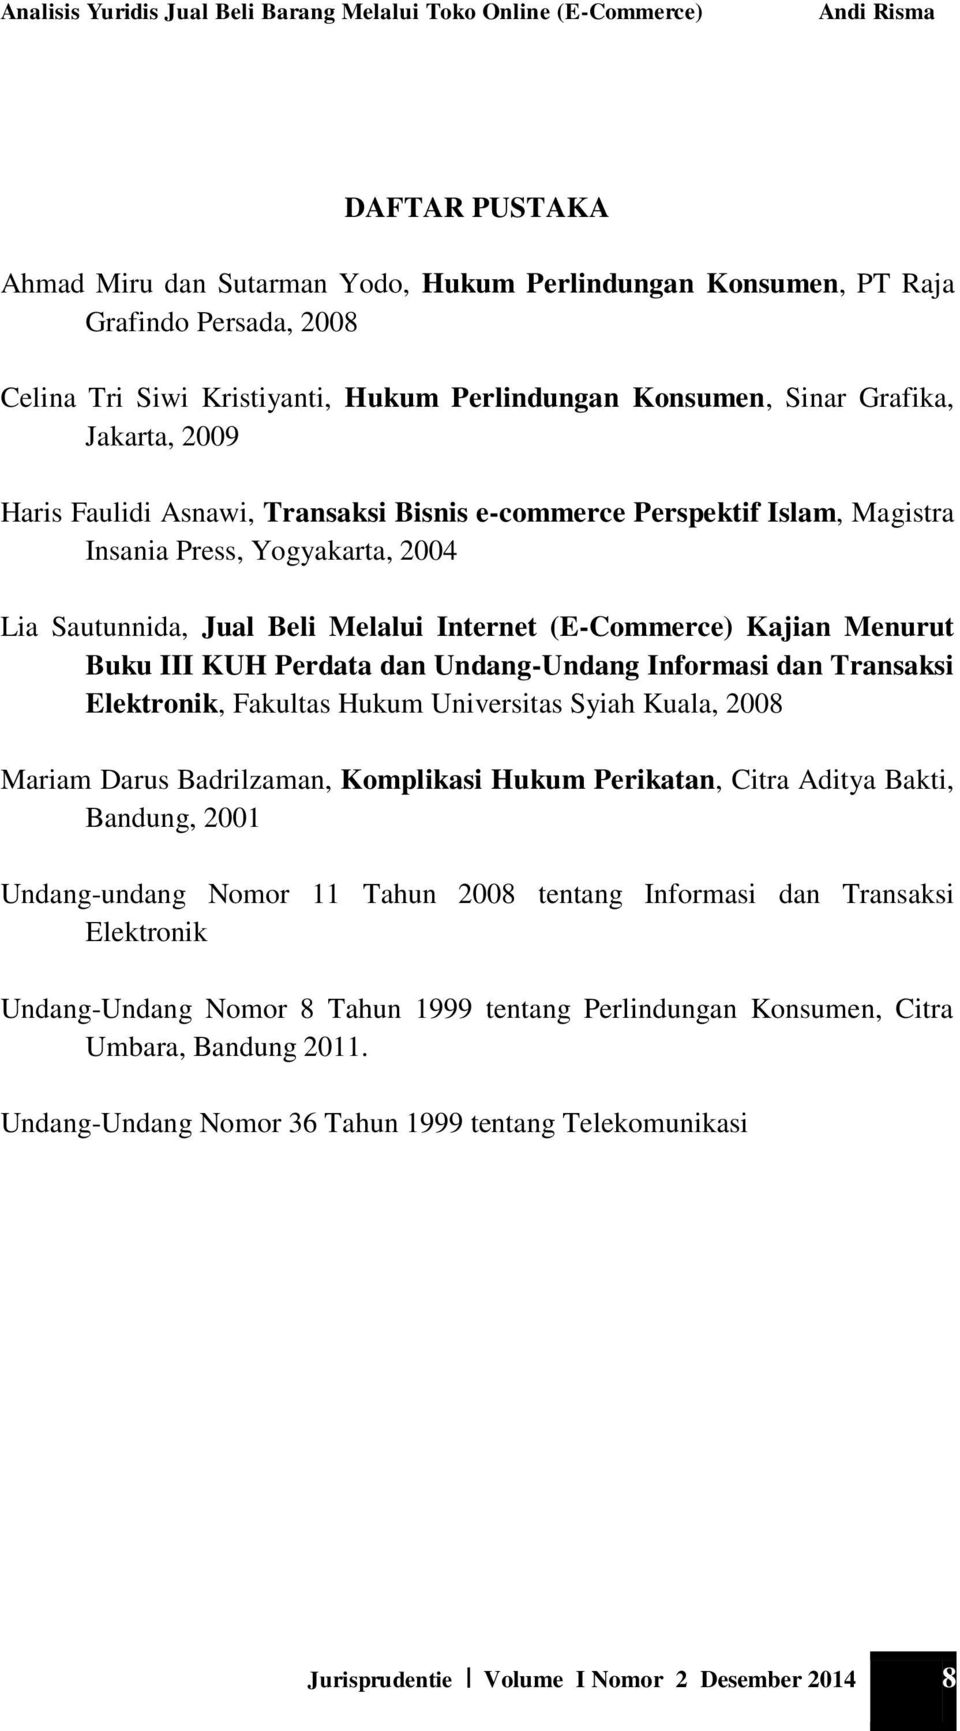 Undang-Undang Informasi dan Transaksi Elektronik, Fakultas Hukum Universitas Syiah Kuala, 2008 Mariam Darus Badrilzaman, Komplikasi Hukum Perikatan, Citra Aditya Bakti, Bandung, 2001 Undang-undang